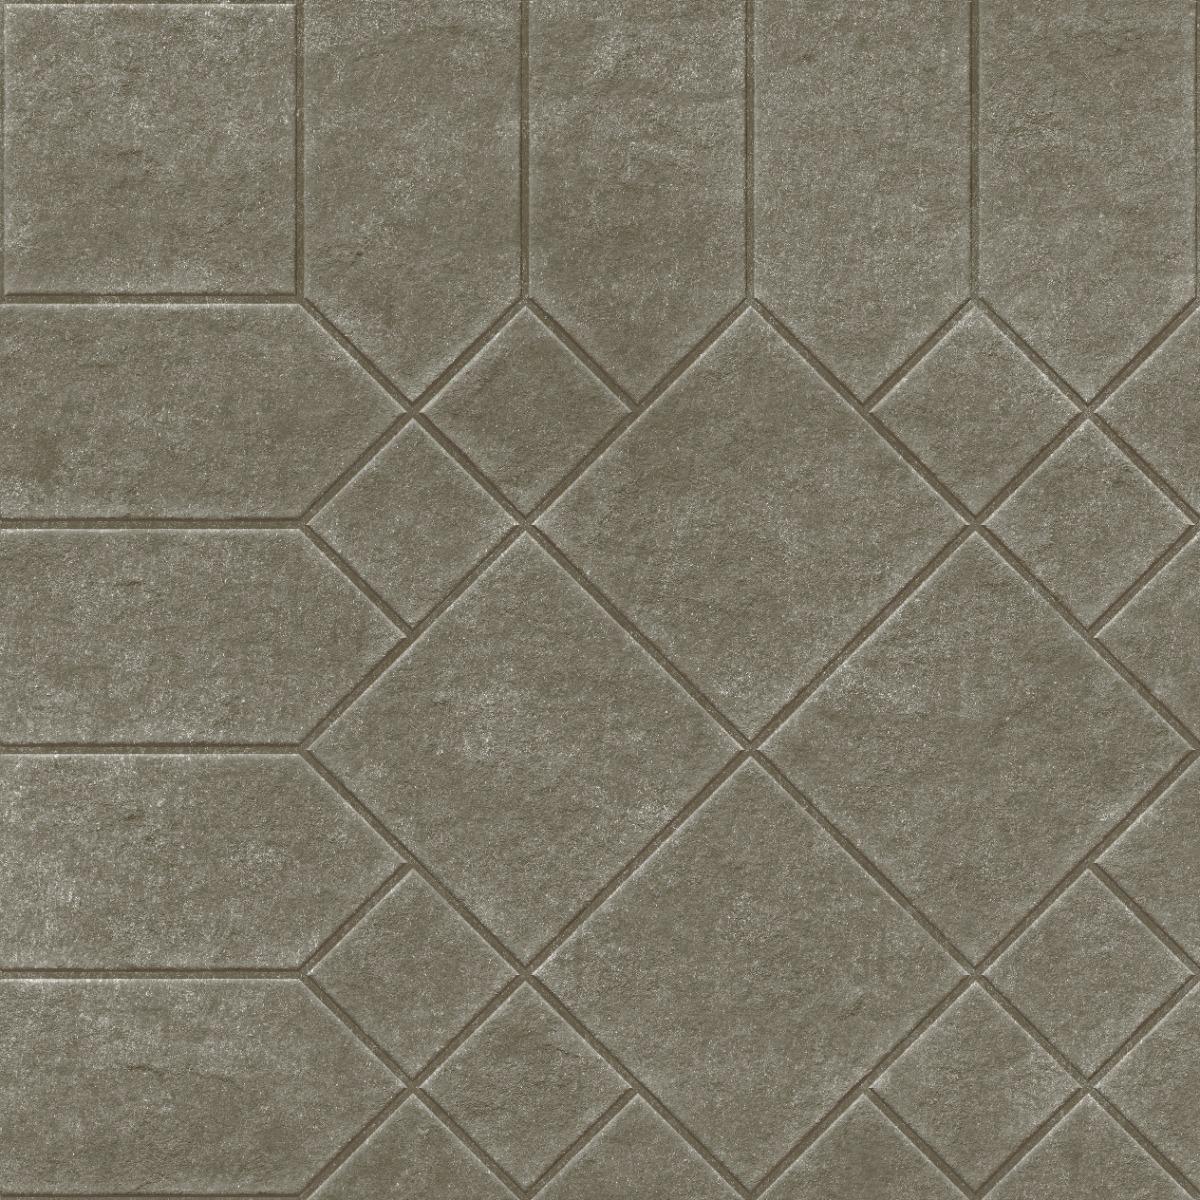 Geometric Tiles for Balcony Tiles, Parking Tiles, Terrace Tiles, Pathway Tiles, High Traffic Tiles, Commercial/Office, Outdoor Area